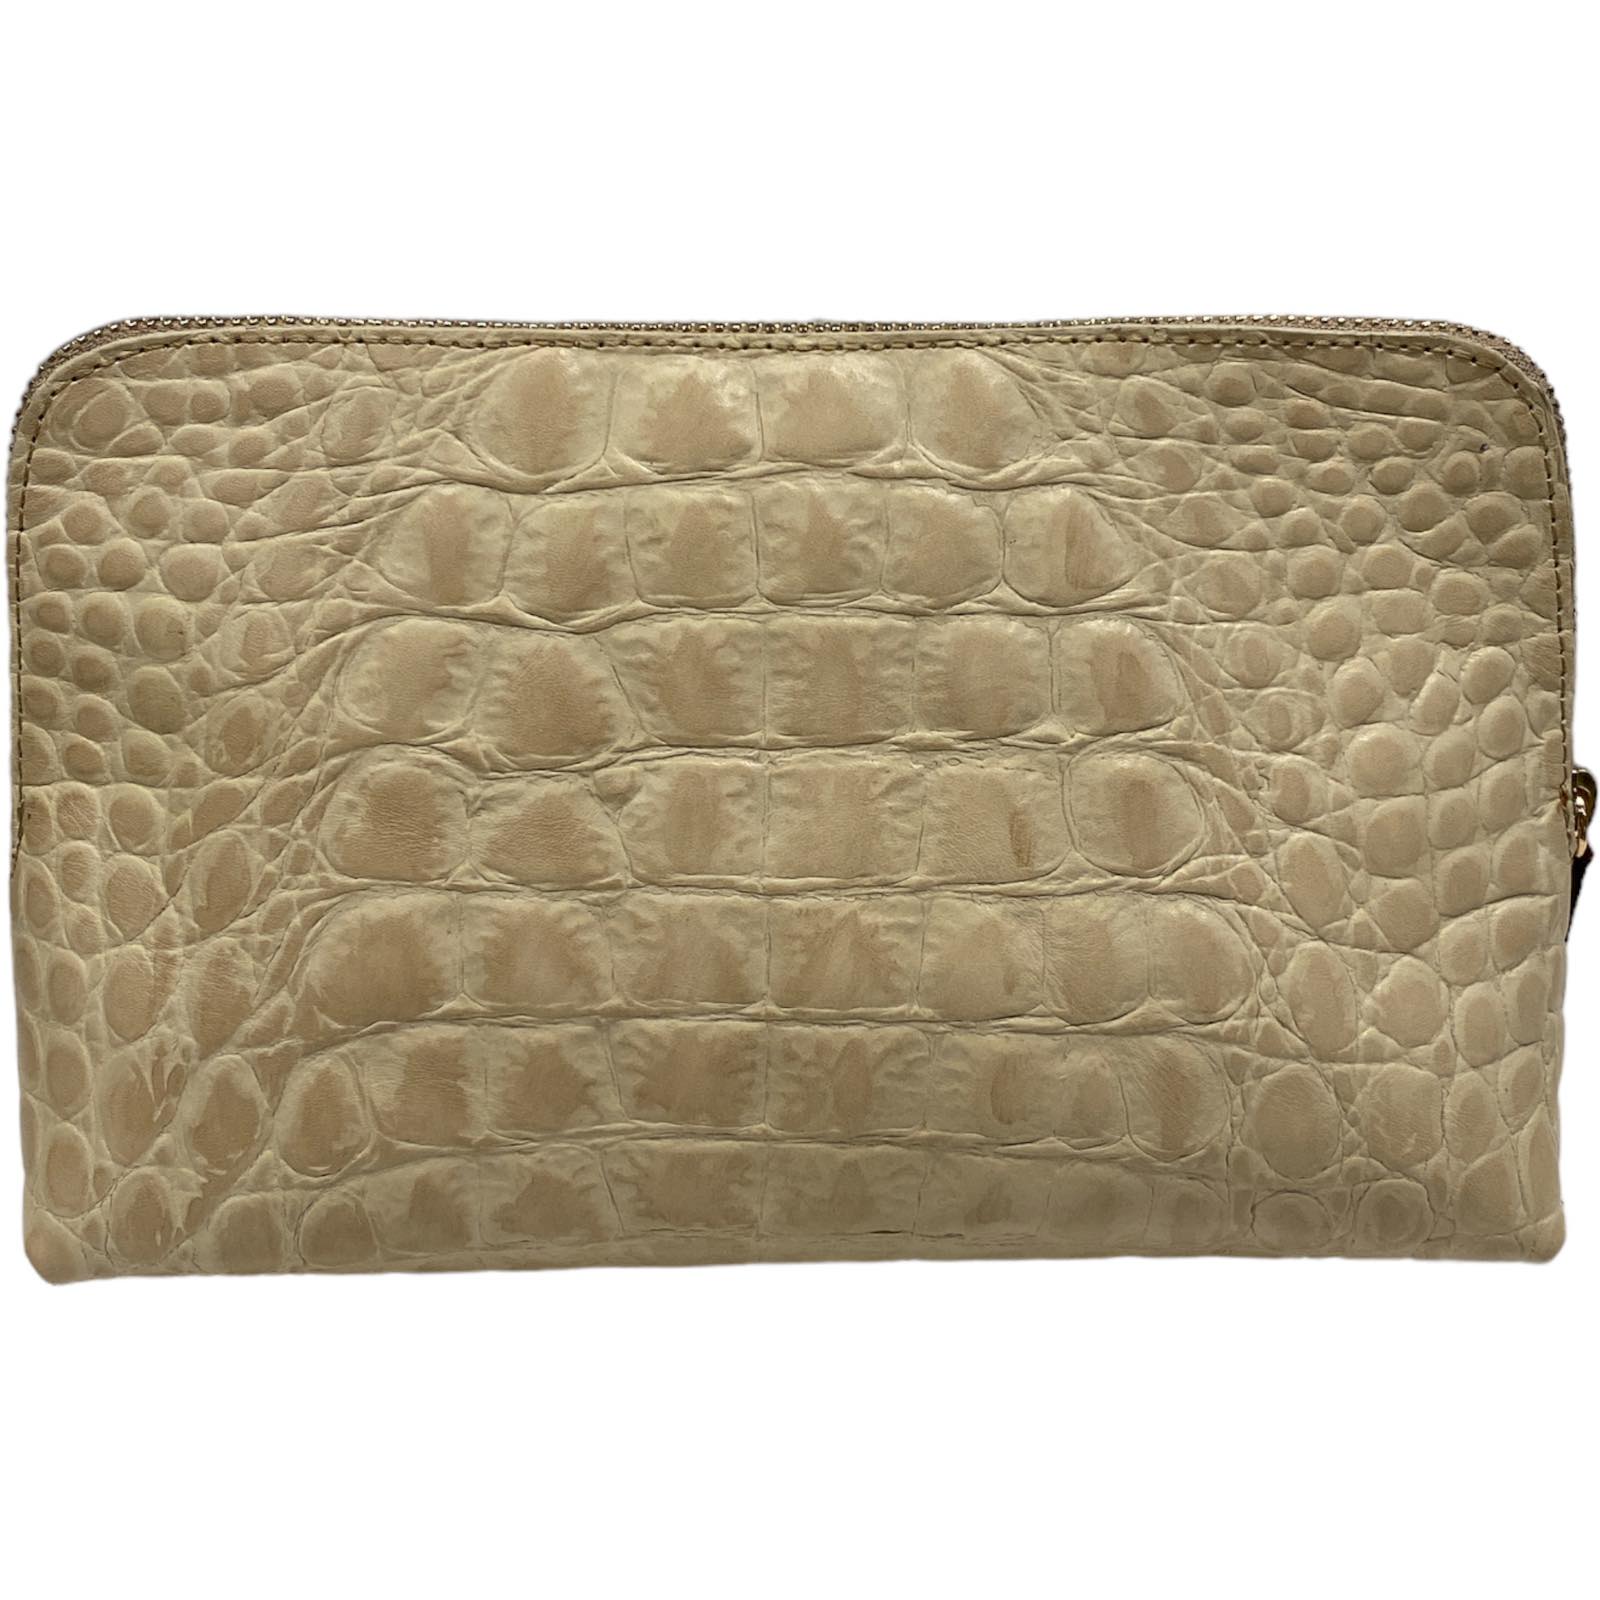 Box XL. Beige alligator-print leather messenger bag